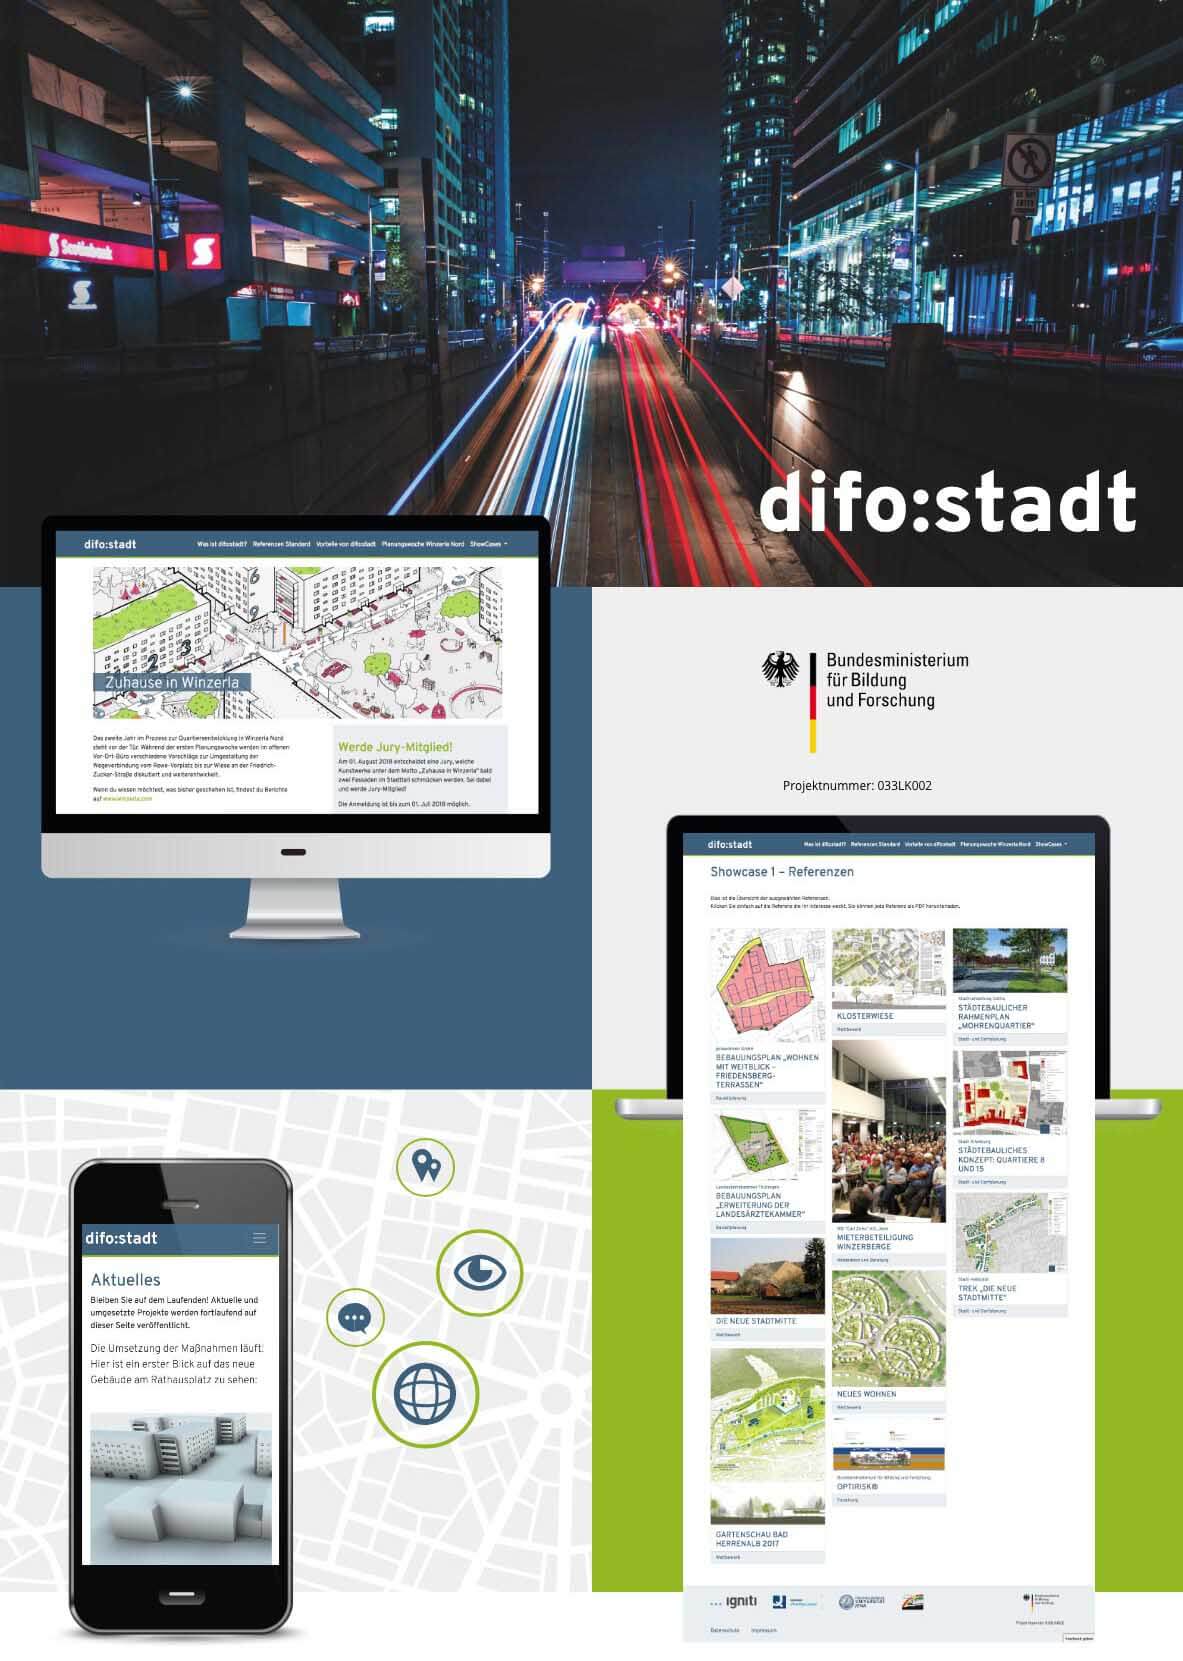 difo:stadt - Digital Forum for Urban Development